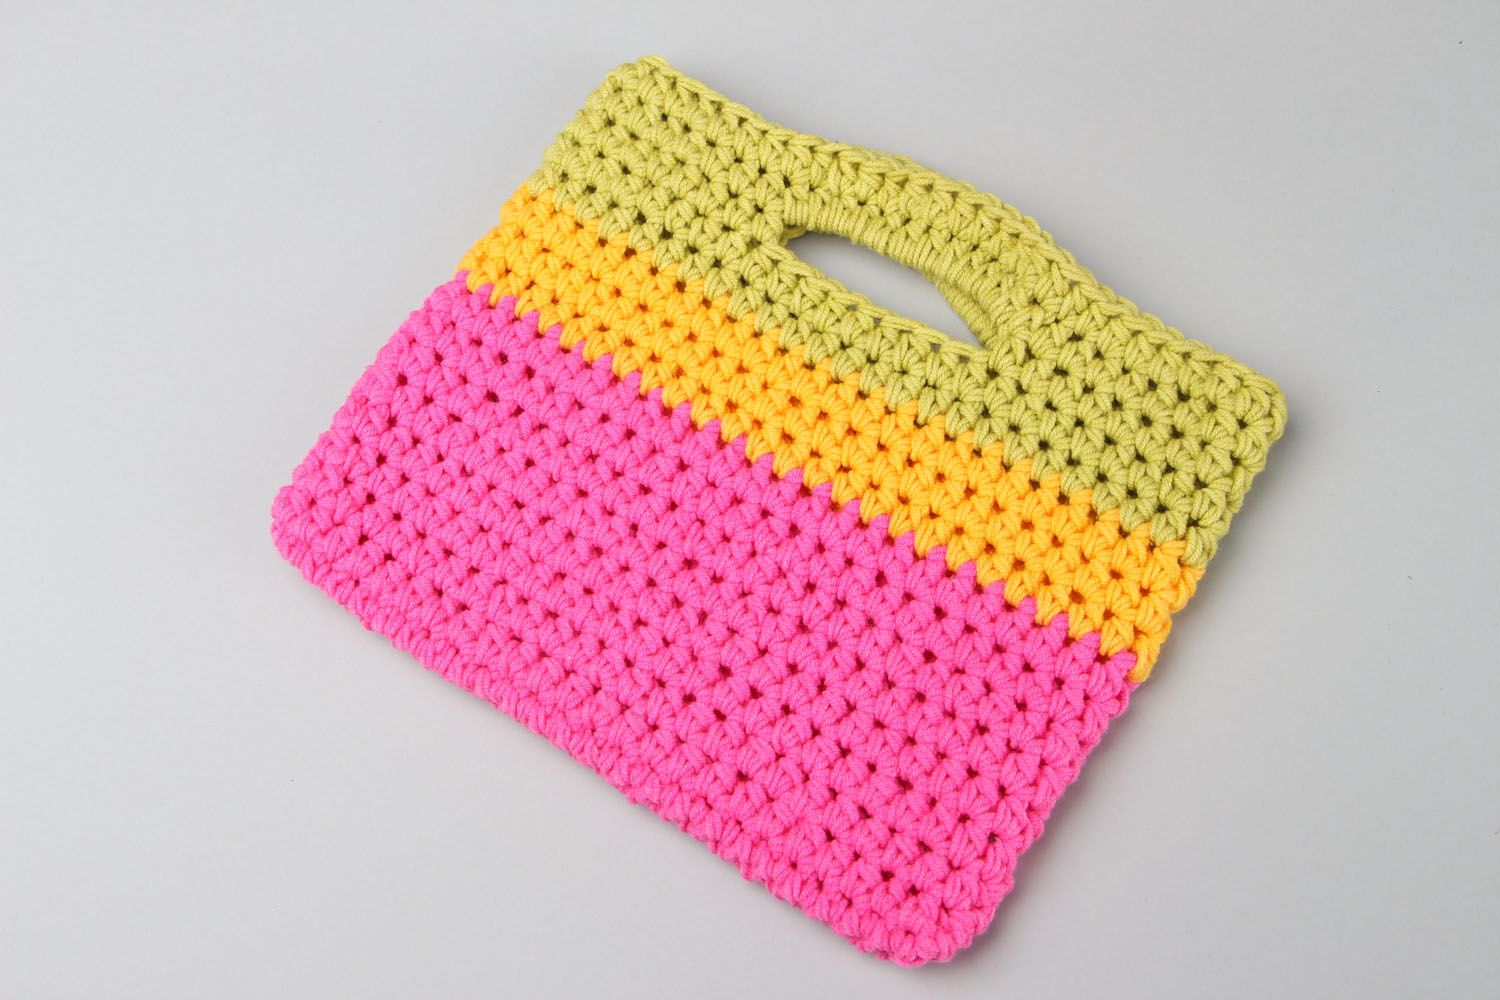 Cotton crocheted bag photo 1